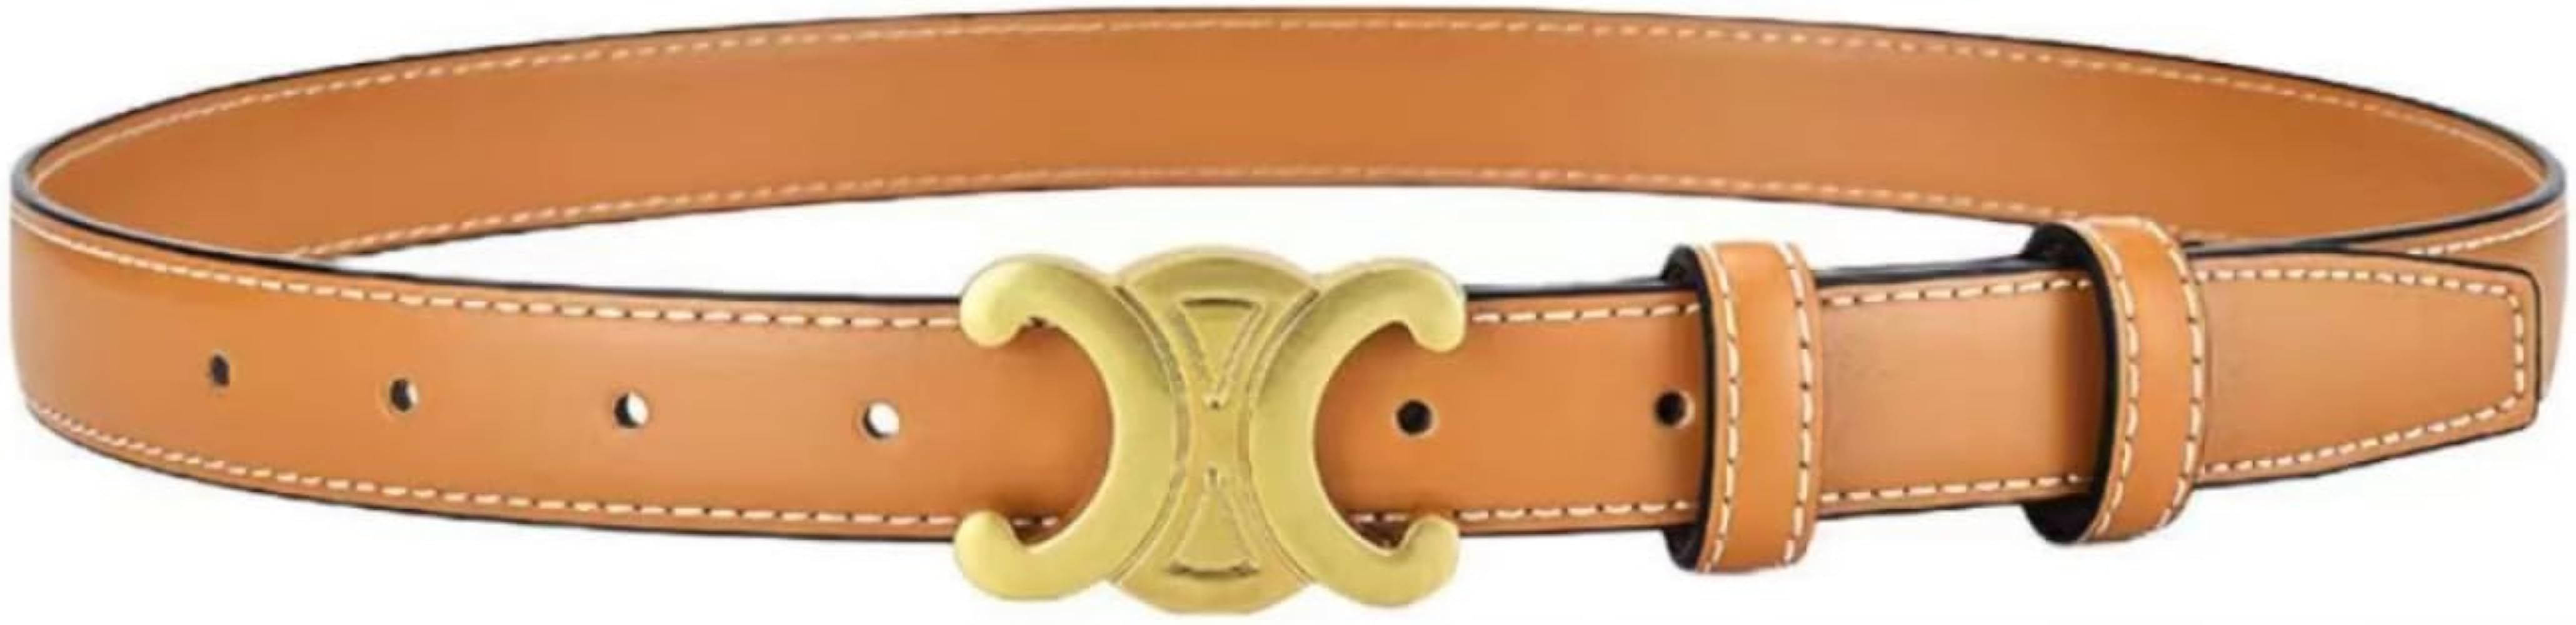 Gold Buckle Waist Belt For Women, Fashion Sof Leather Designer Belts For Jeans Dress Coat Women 2... | Amazon (US)